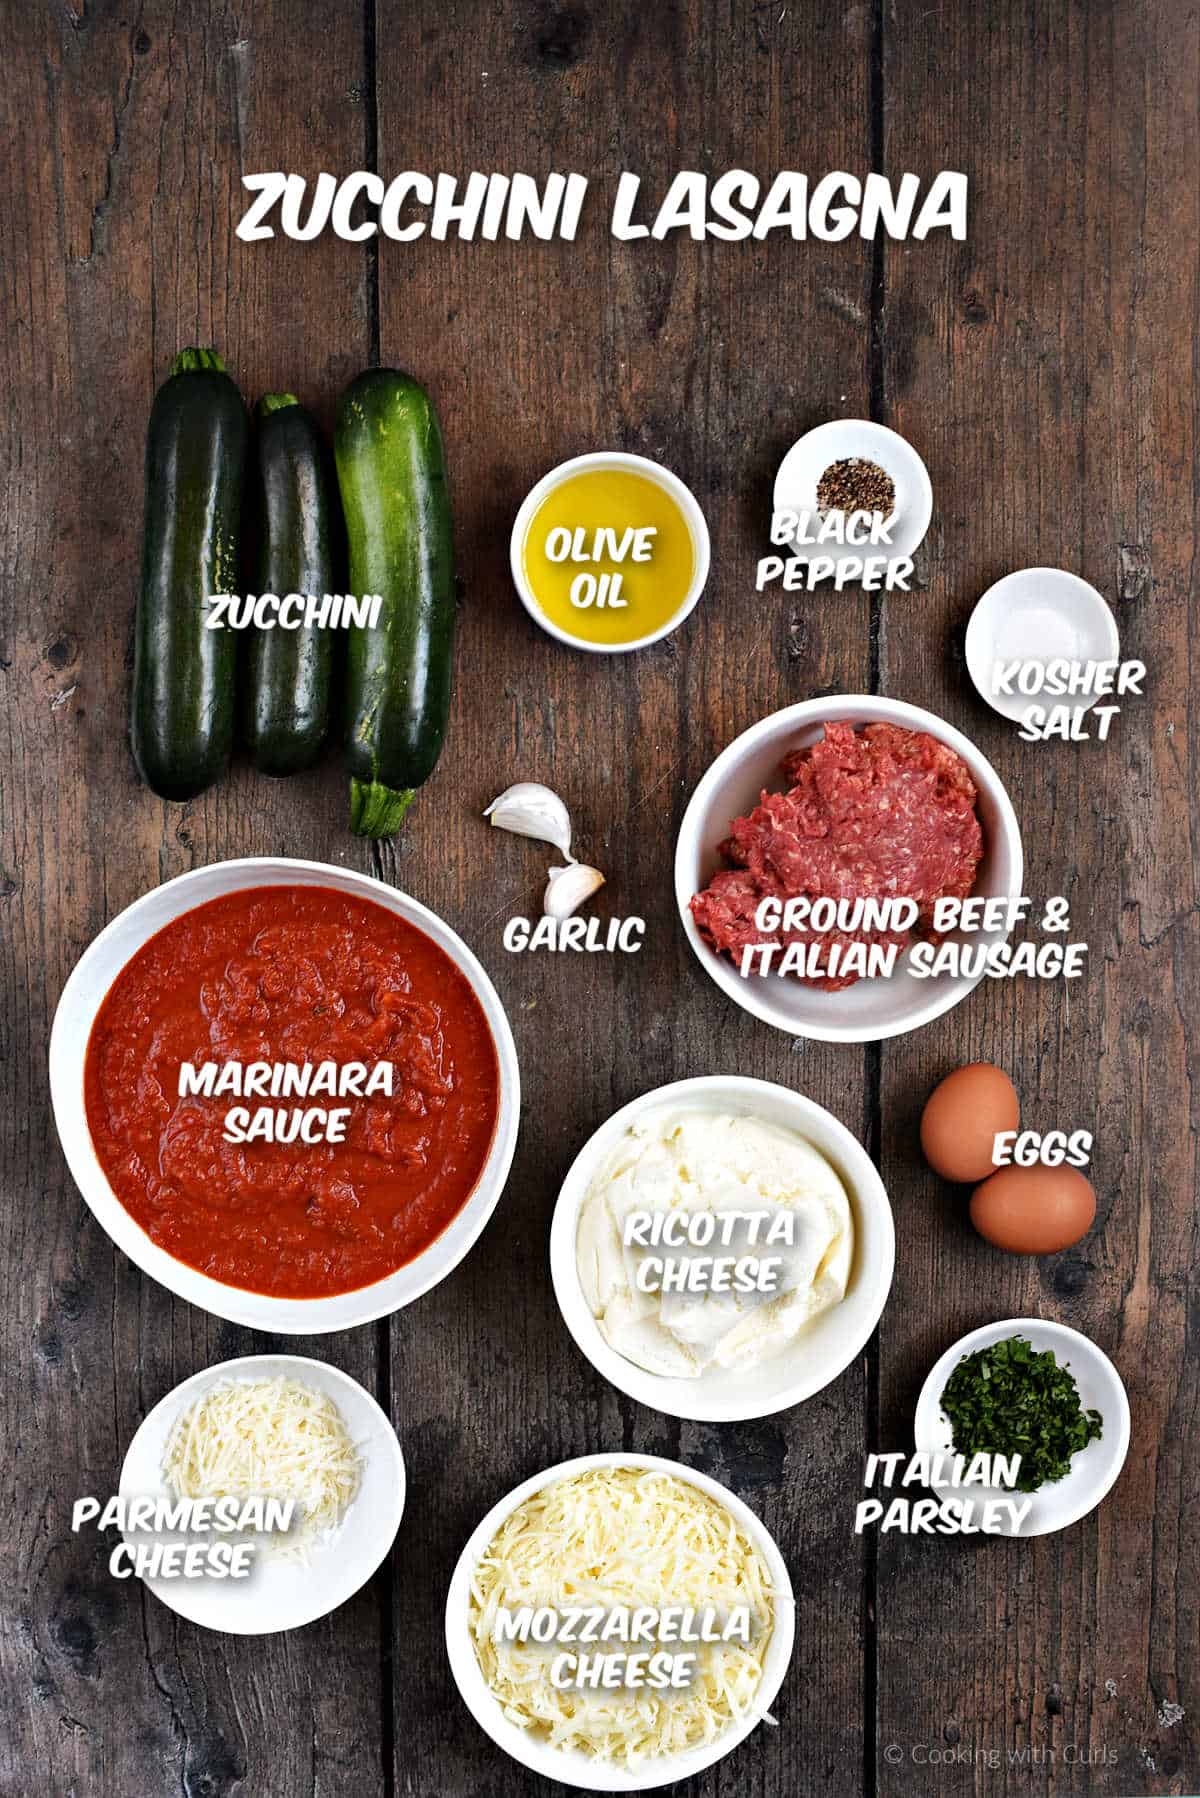 Zucchini Lasagna ingredients.